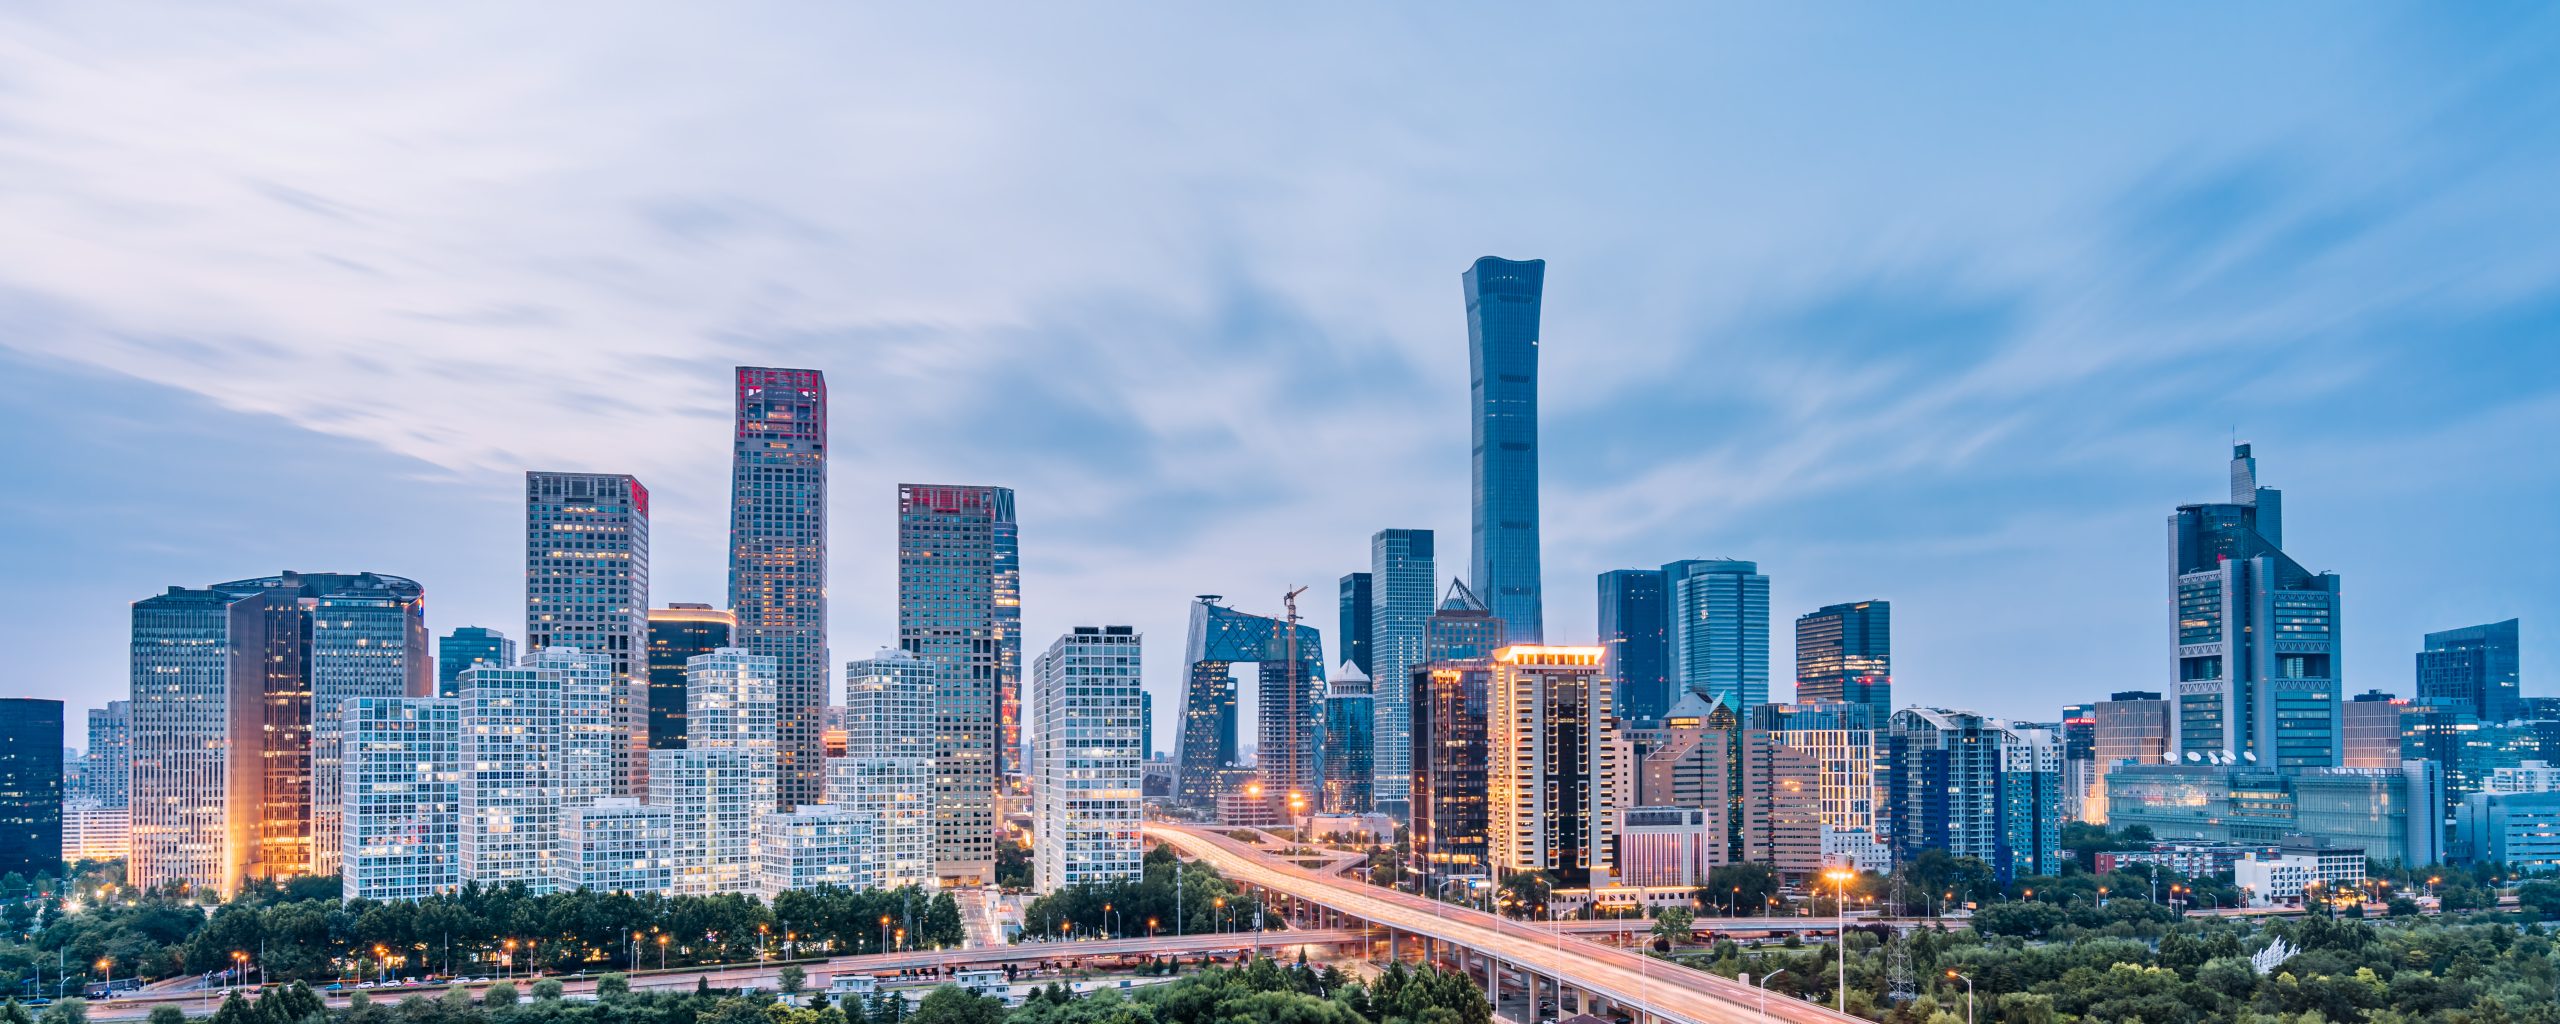 Dusk view of skyline in Beijing, China.